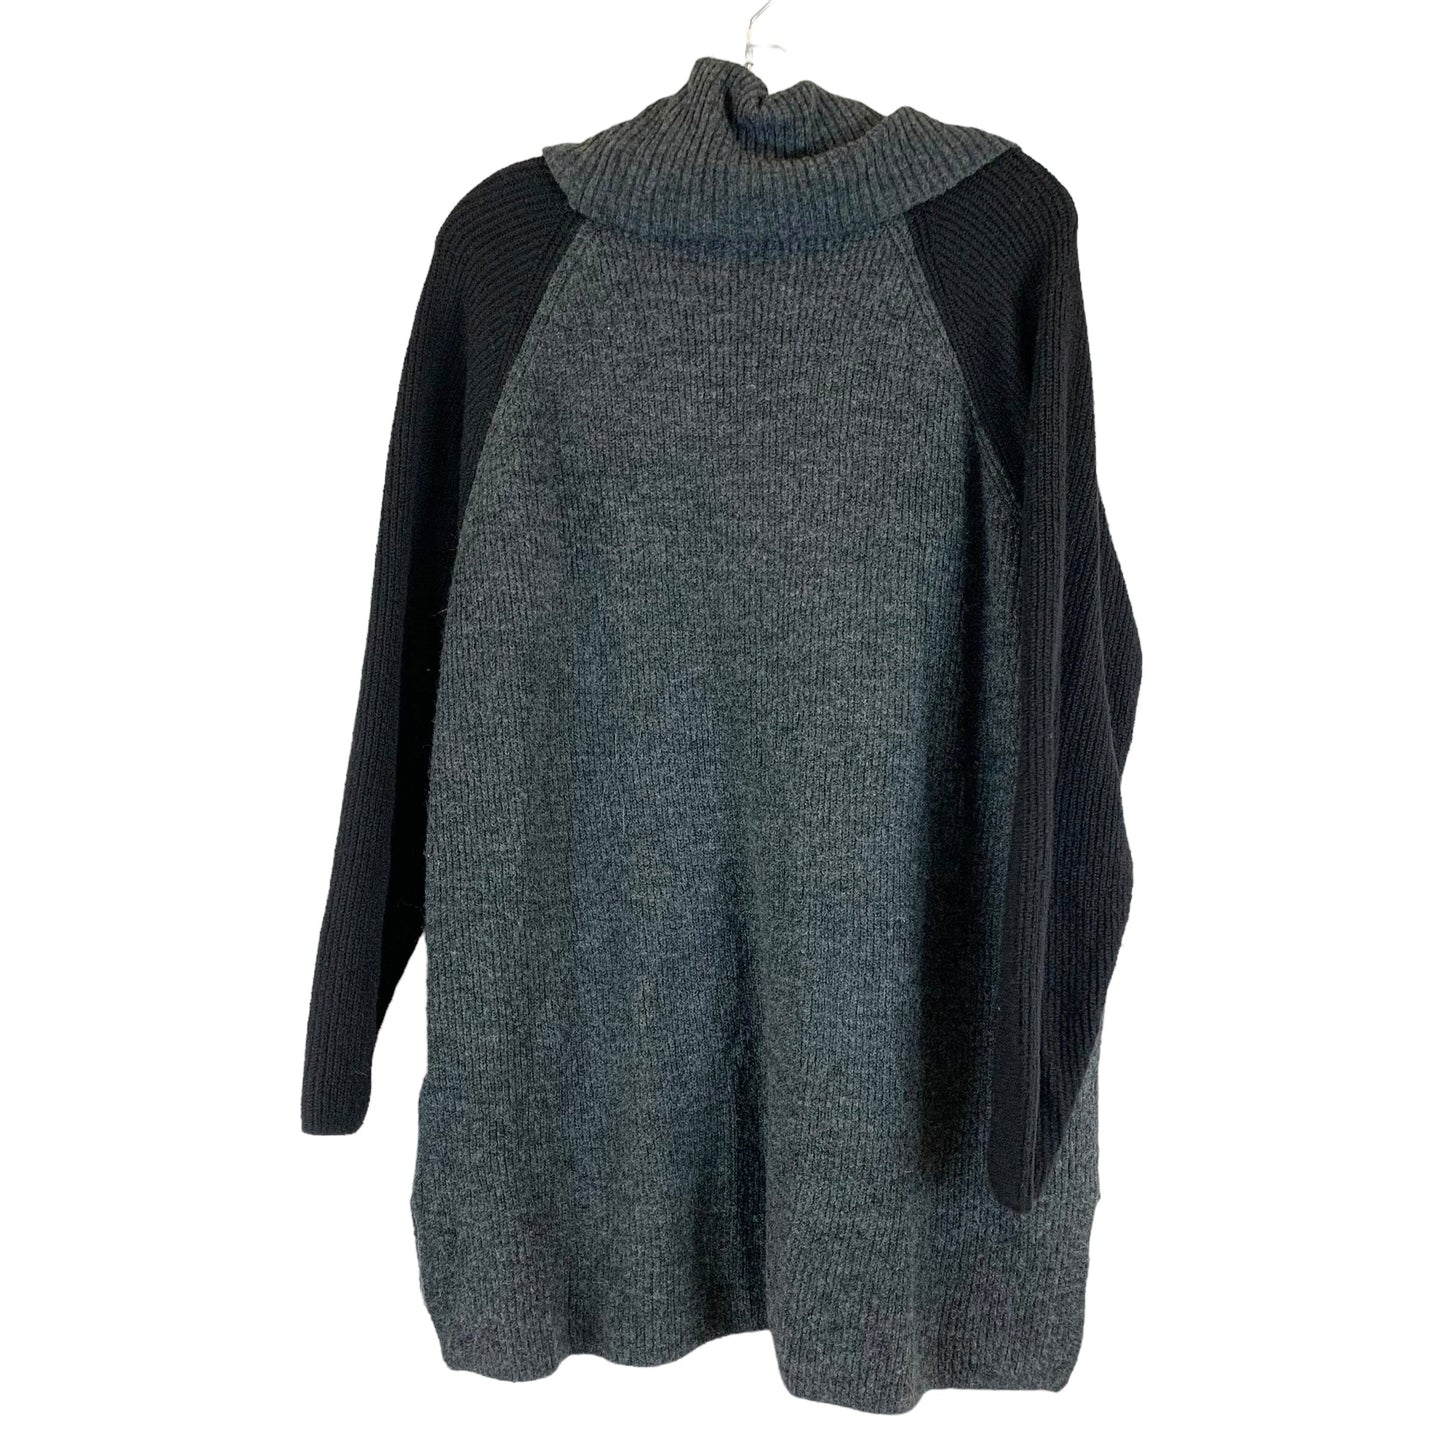 Grey Sweater Lane Bryant, Size 3x